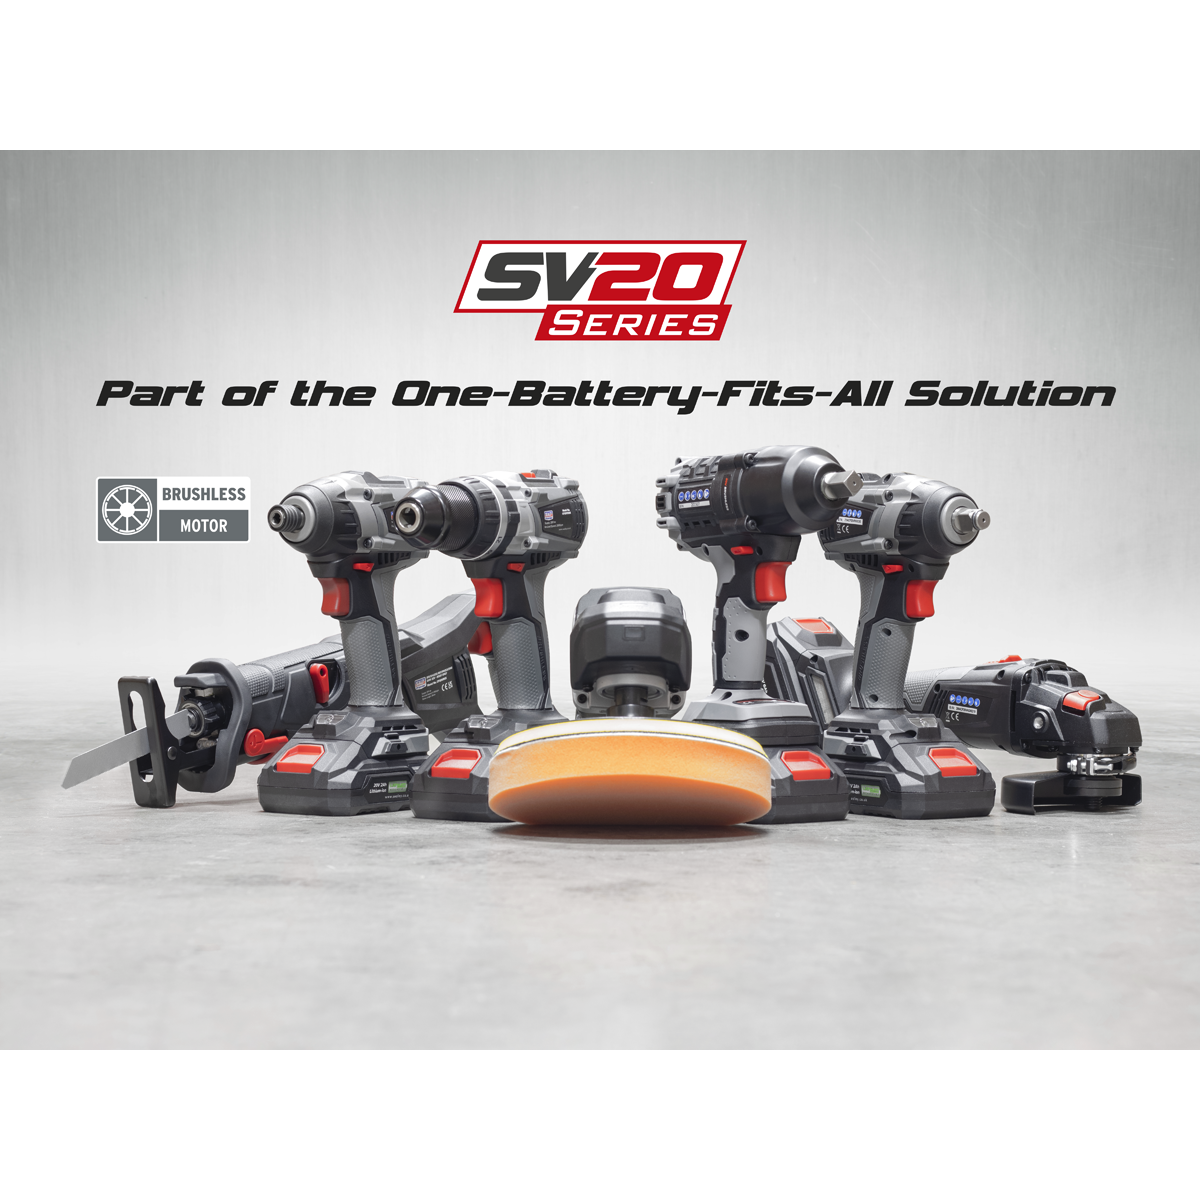 Sealey SV20 Series cordless power tools